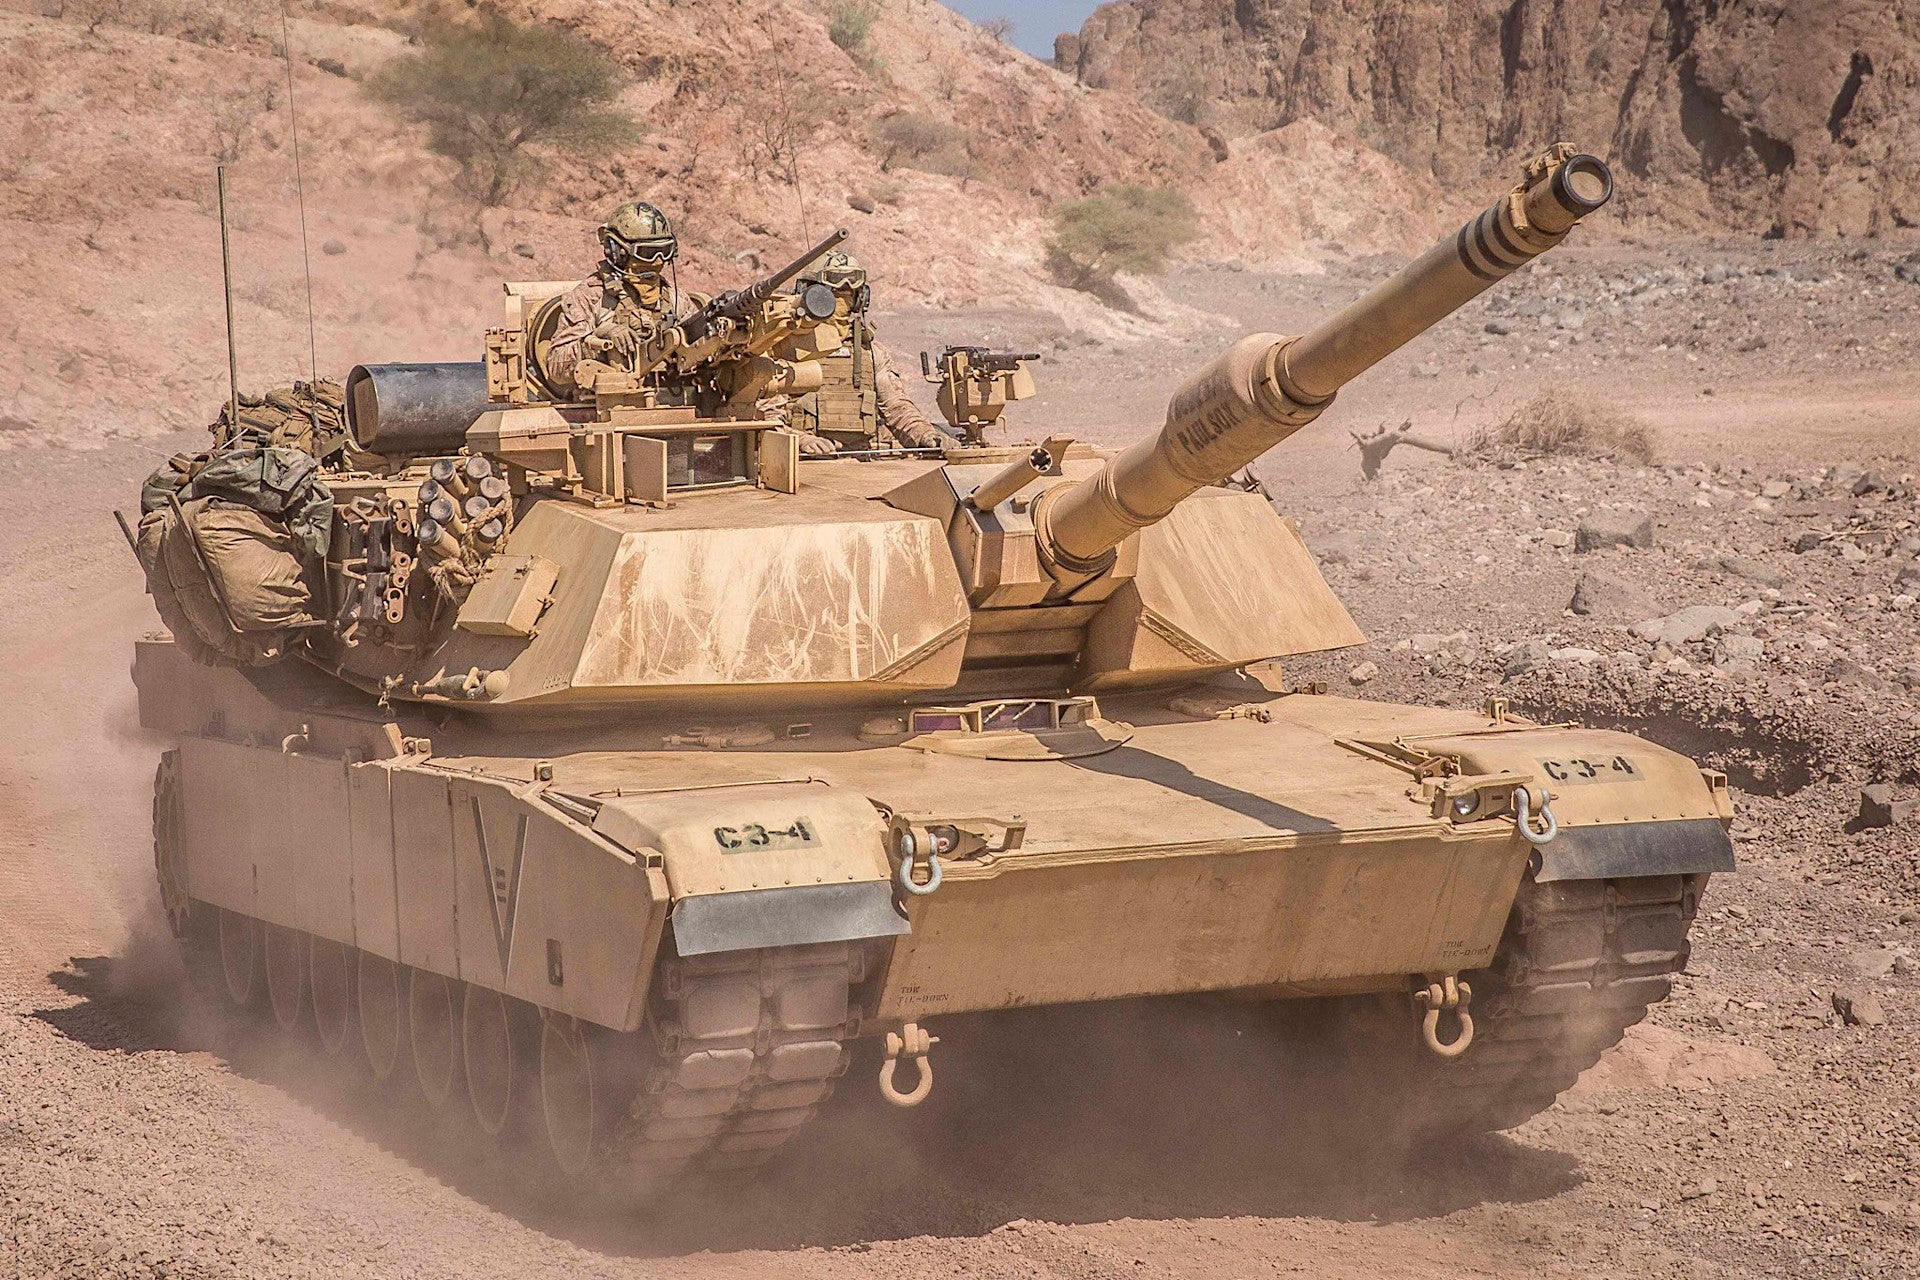 M1 Abrams Tanks In U.S. Inventory Have Armor Too Secret To Send To Ukraine